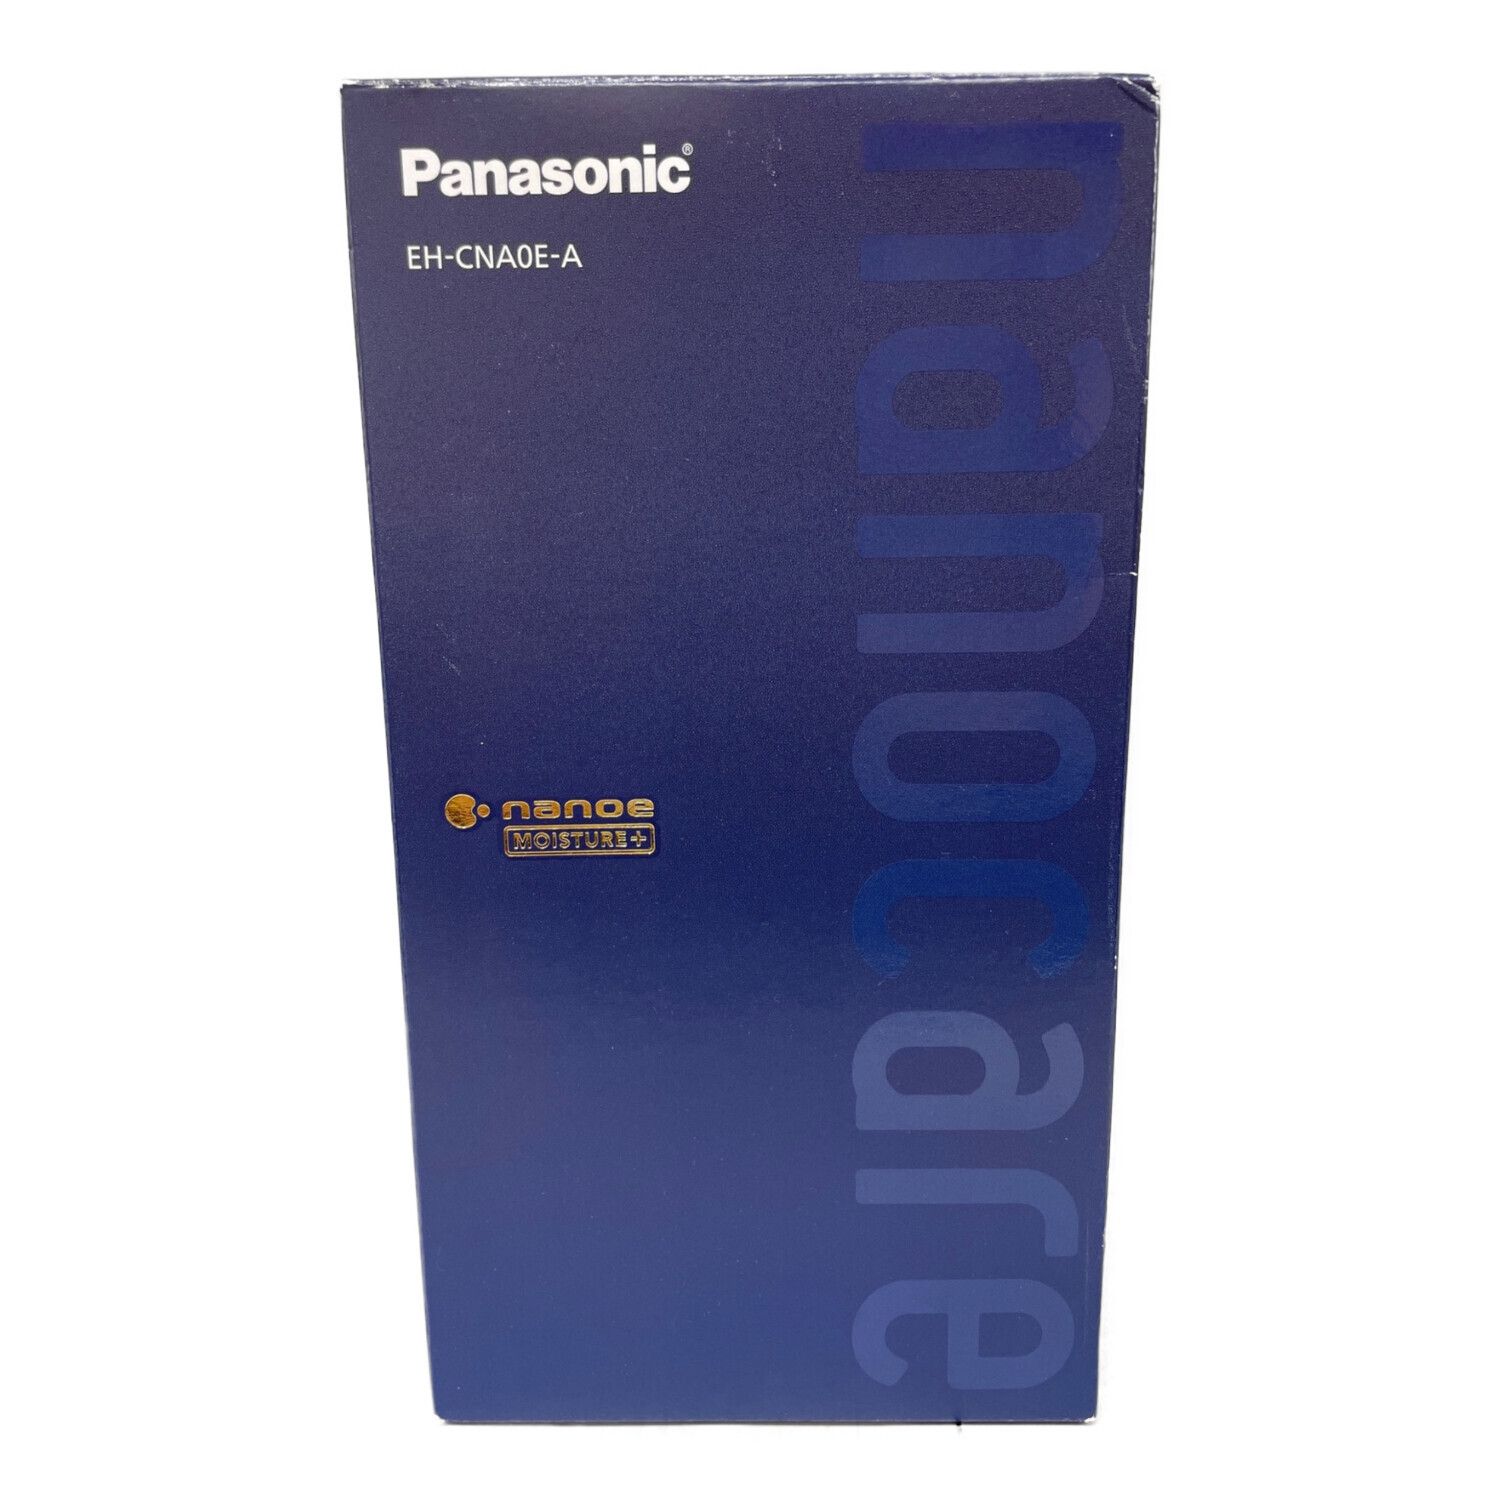 Panasonic (パナソニック) ドライヤー ナノケア EH-CNA0E-A